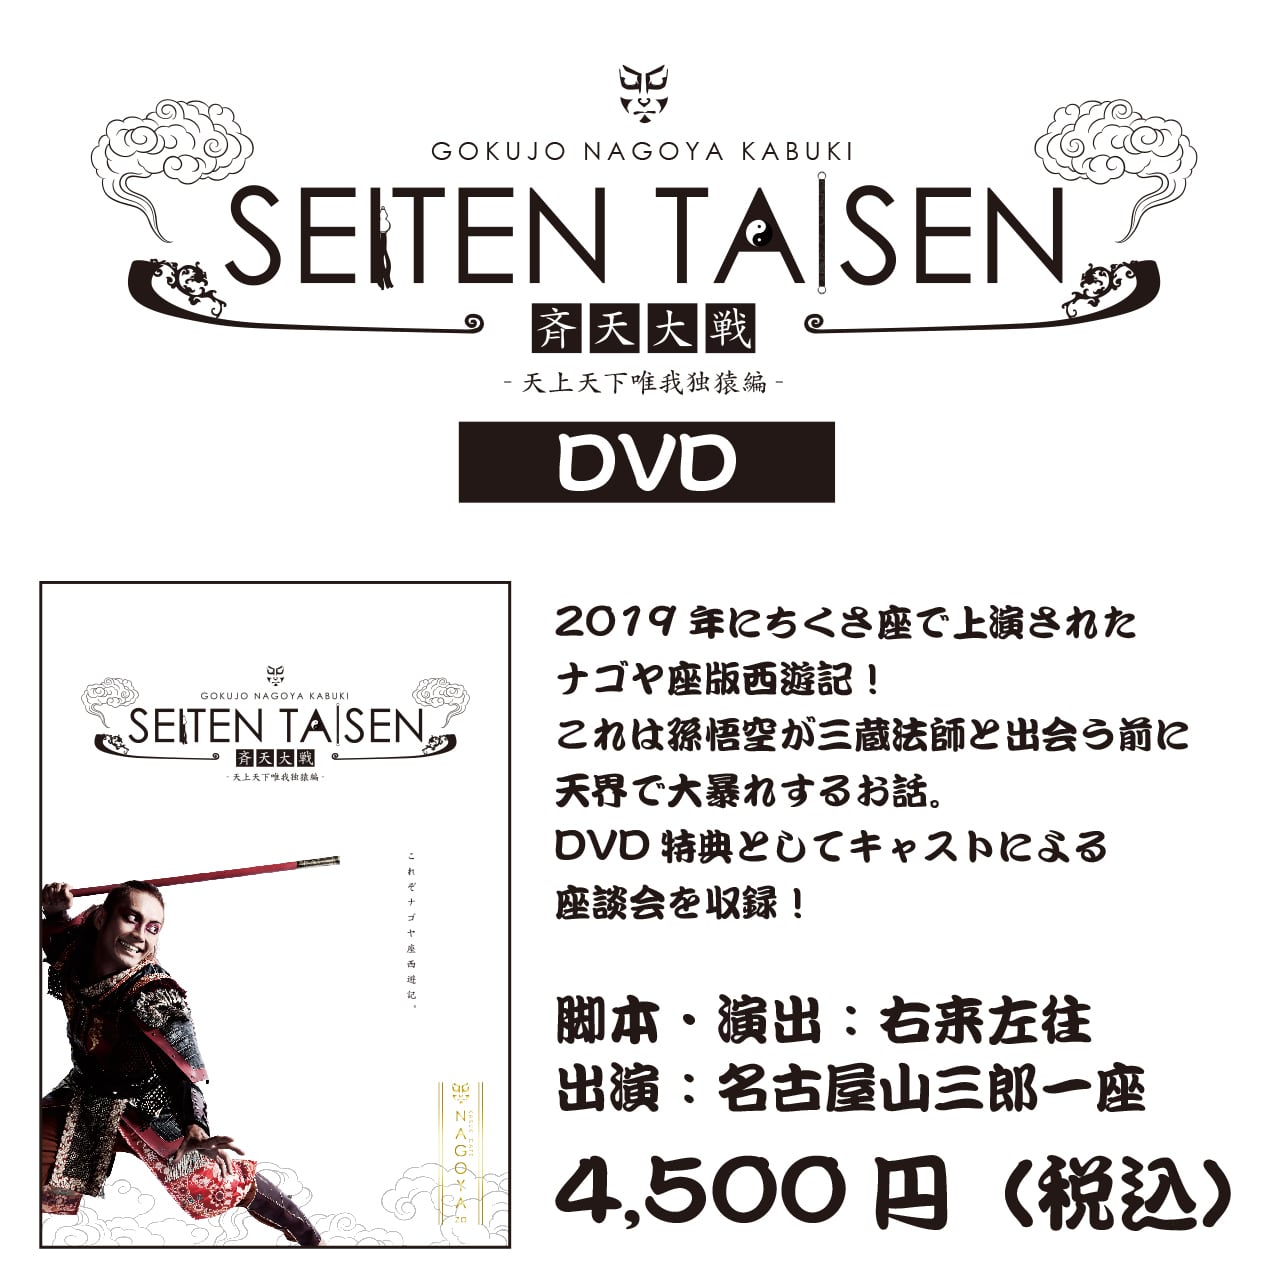 THE SHINSENGUMI 2015 DVD